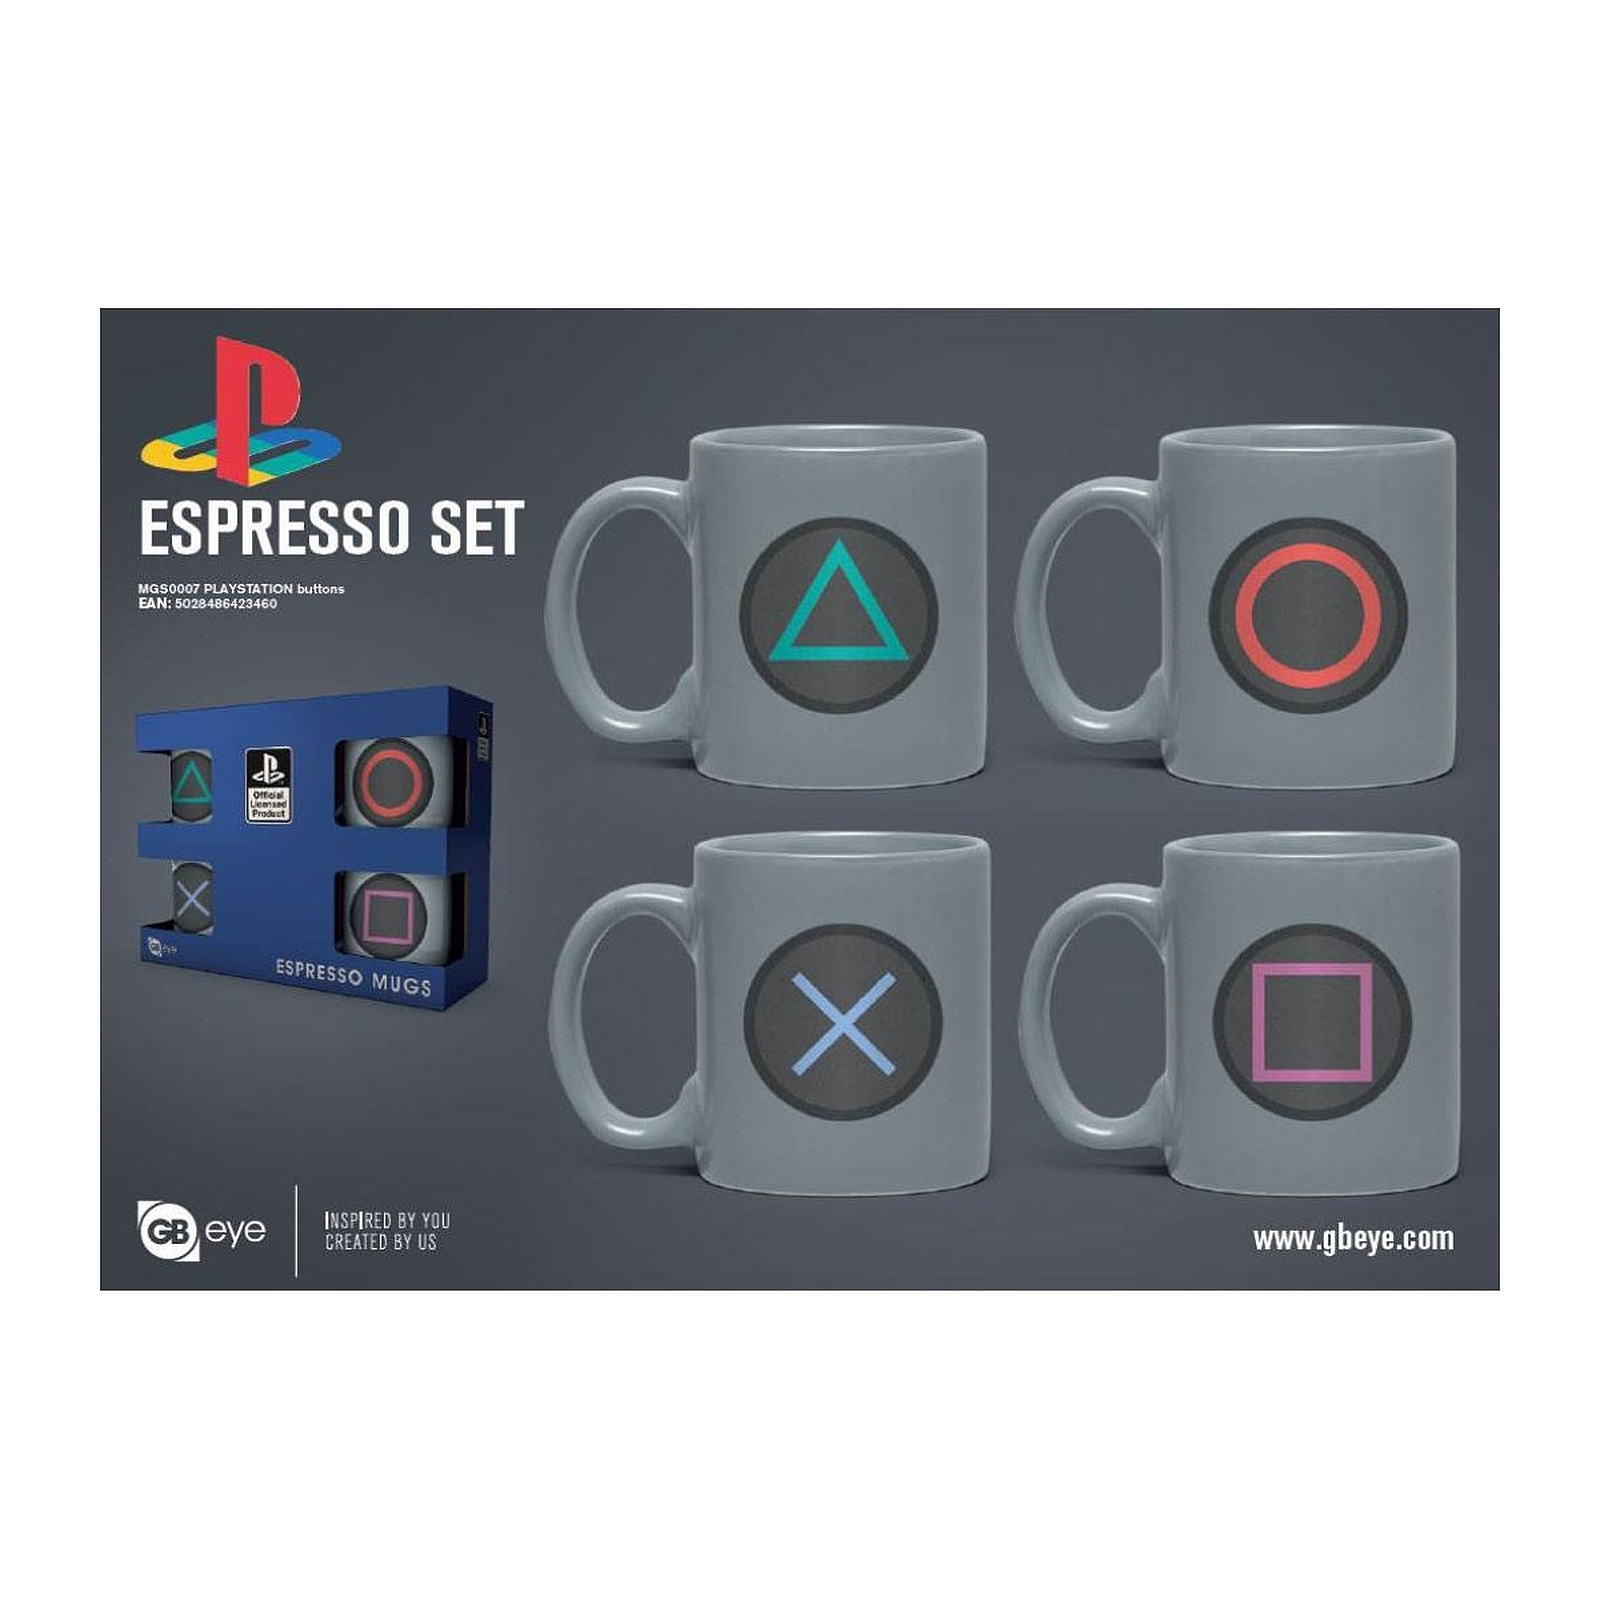 Sony PlayStation - Pack 4 tasses Espresso Buttons - Mugs GB Eye